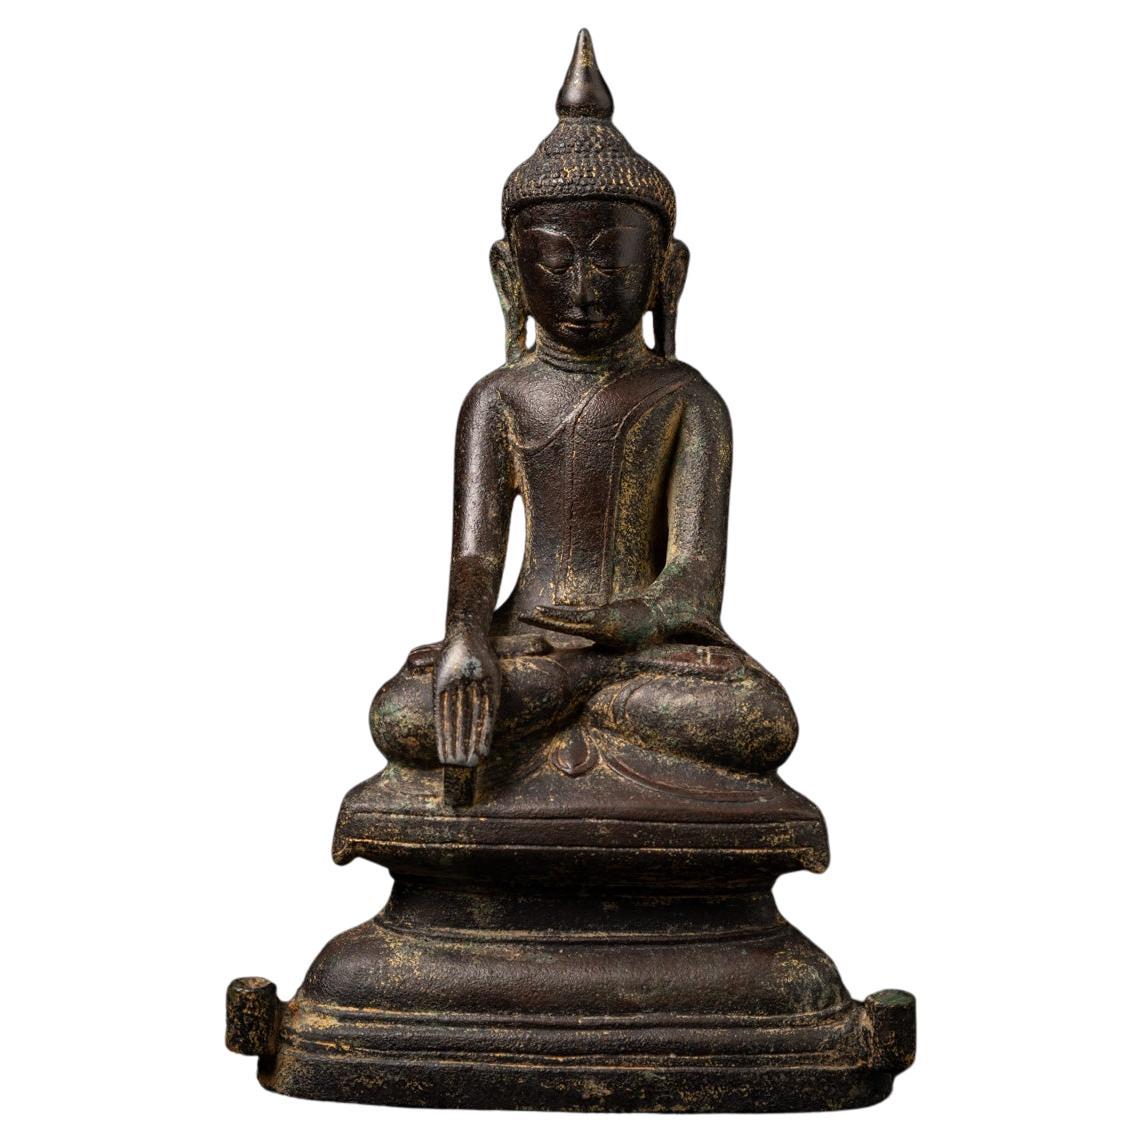 18th century Antique bronze Burmese Shan Buddha statue from Burma